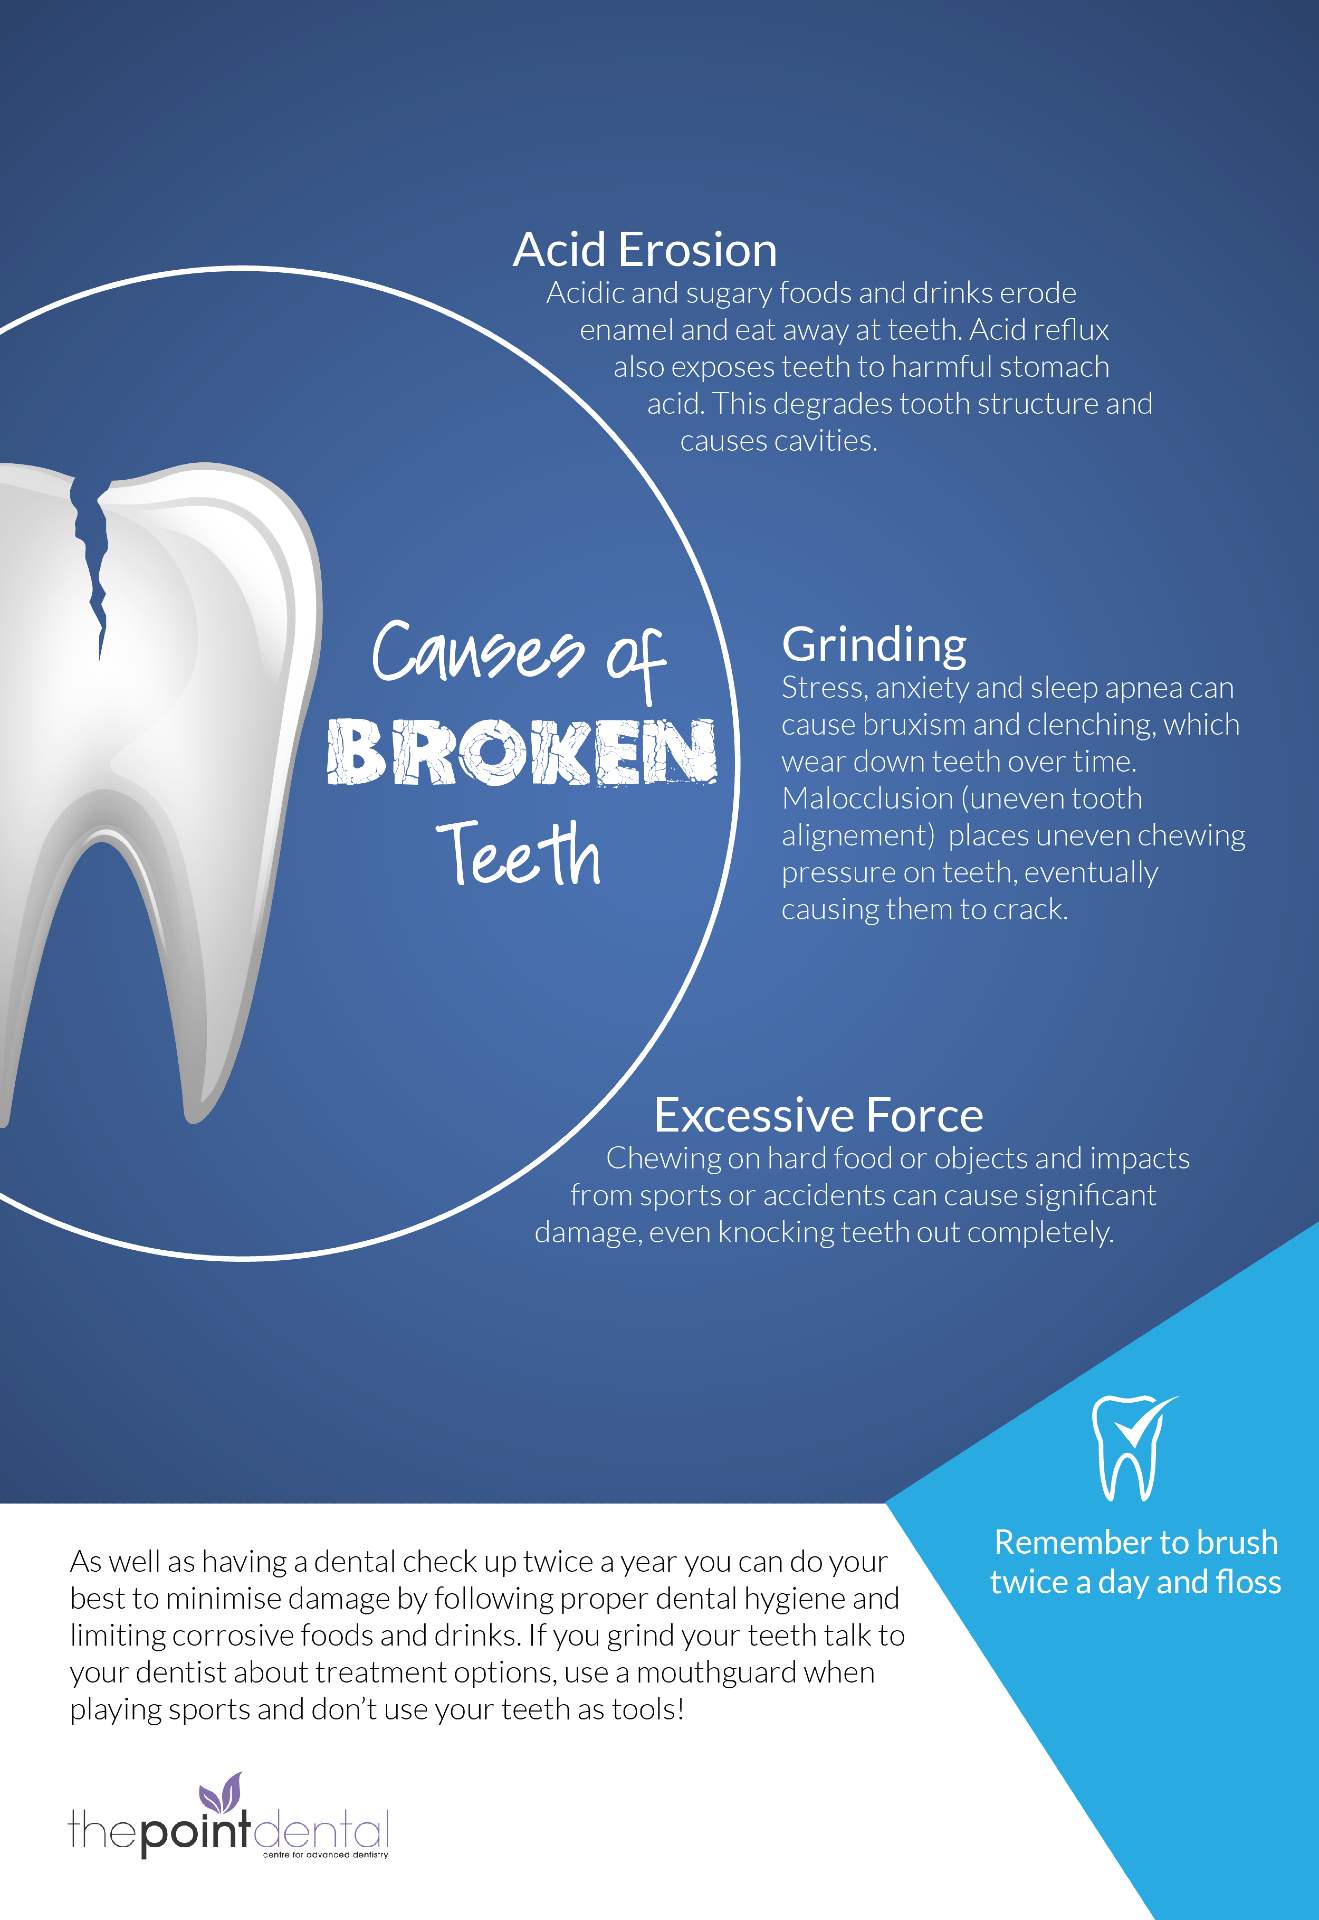 causes of broken teeth infographic